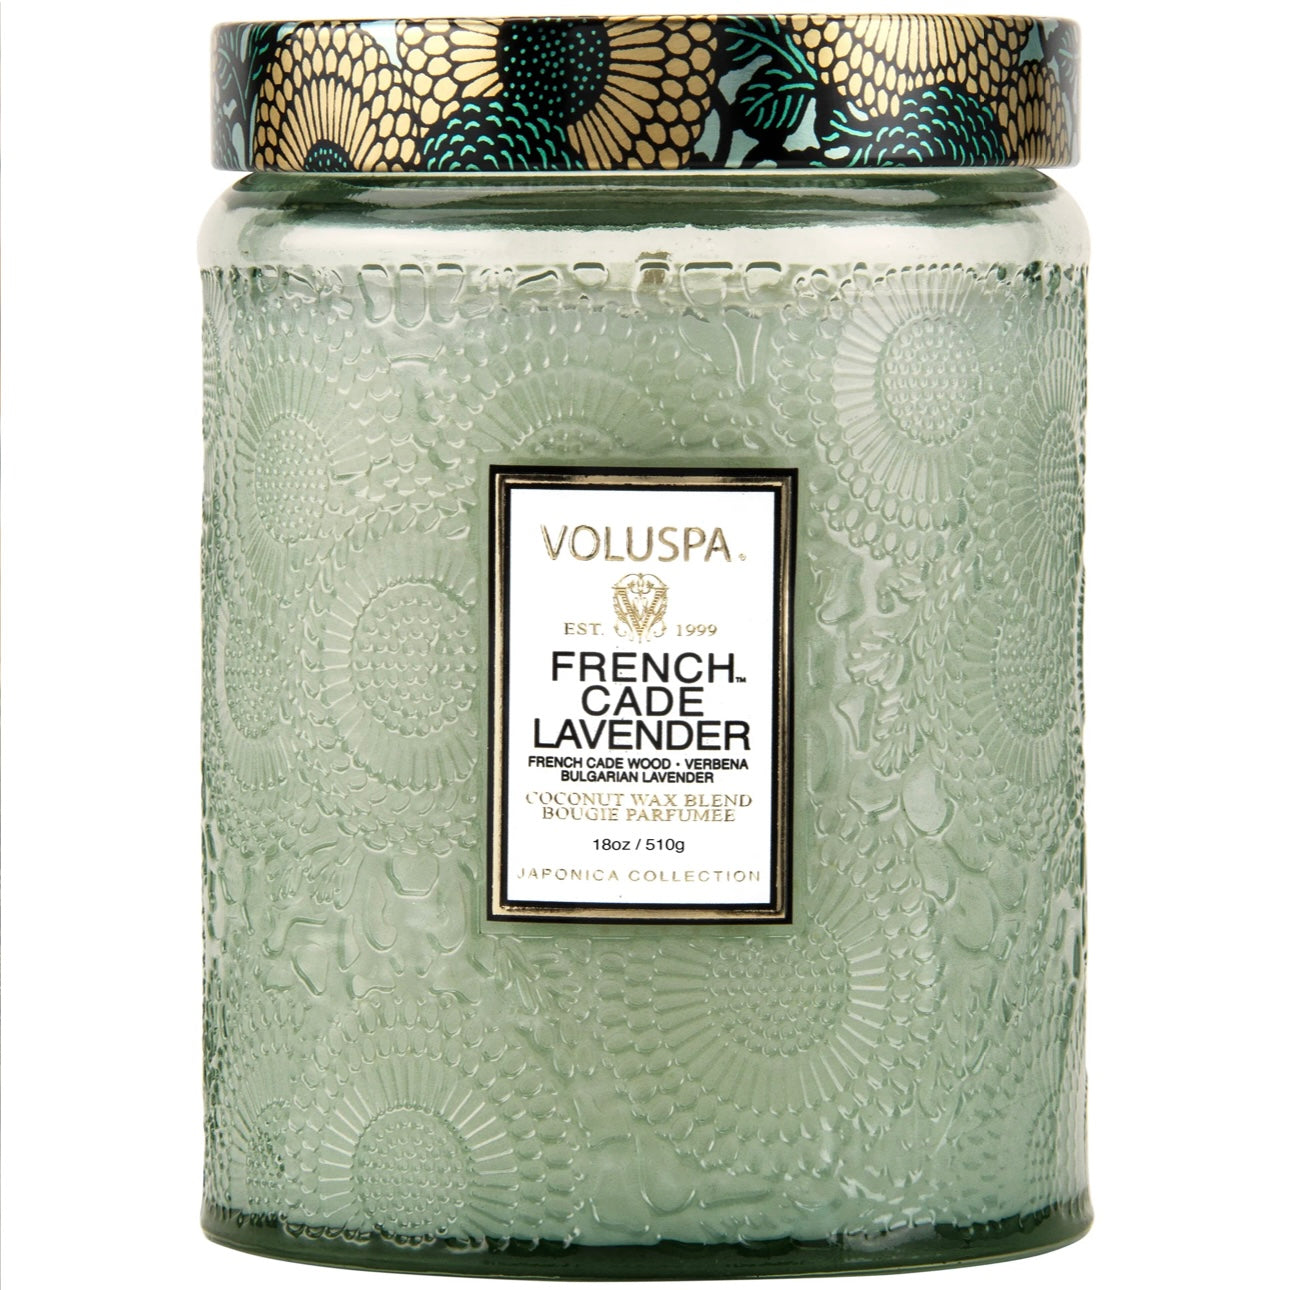 Voluspa French Cade Lavender Large Jar Candle